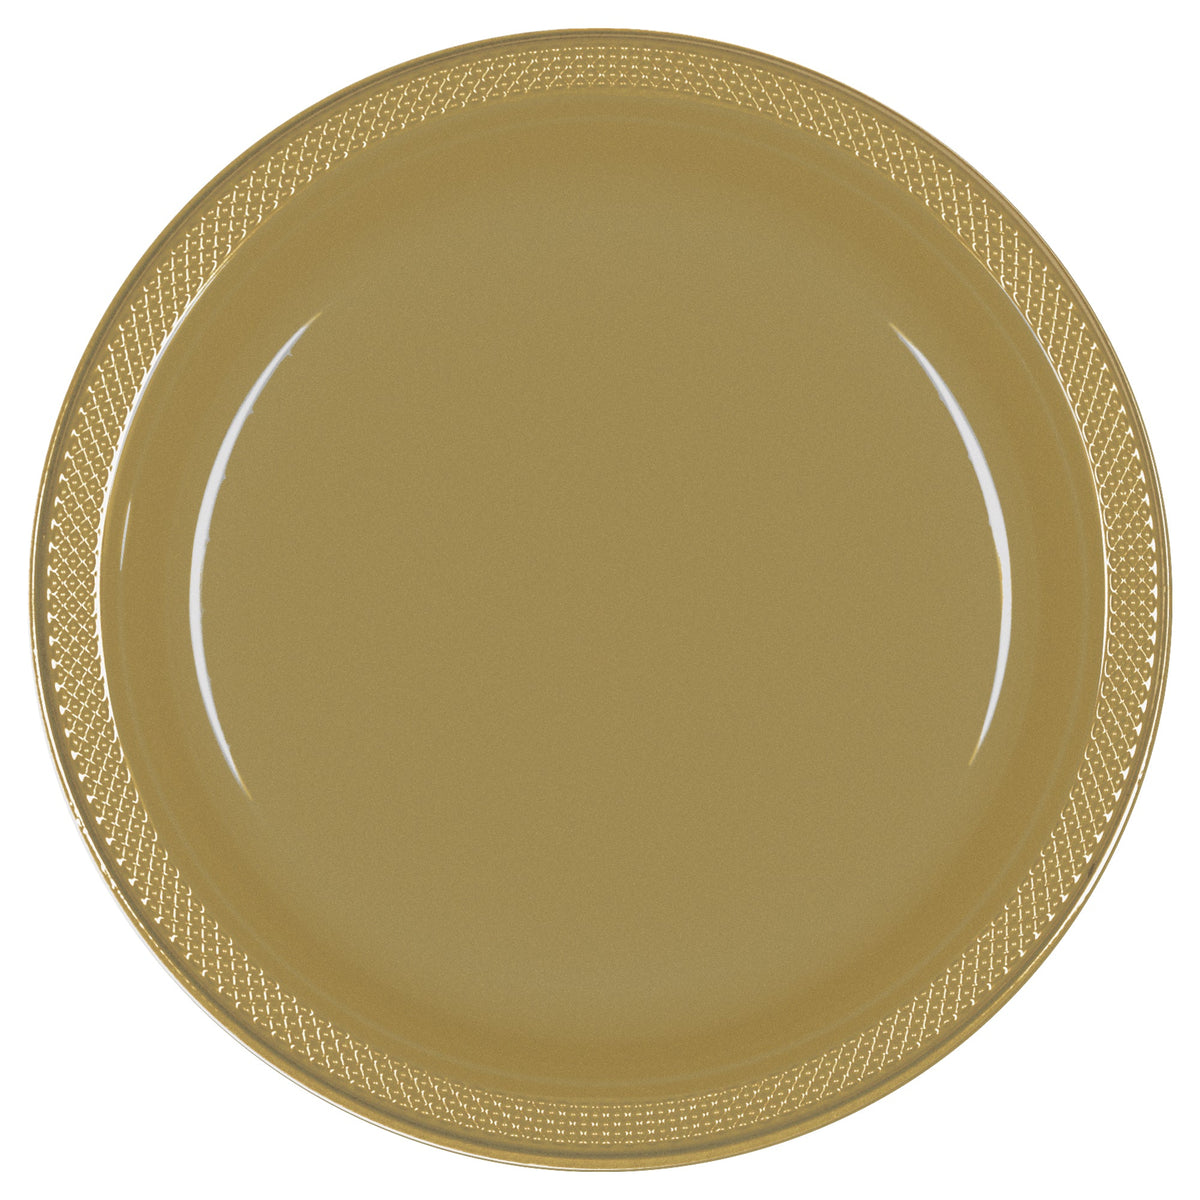 Gold 7" Round Plastic Plates 20 count